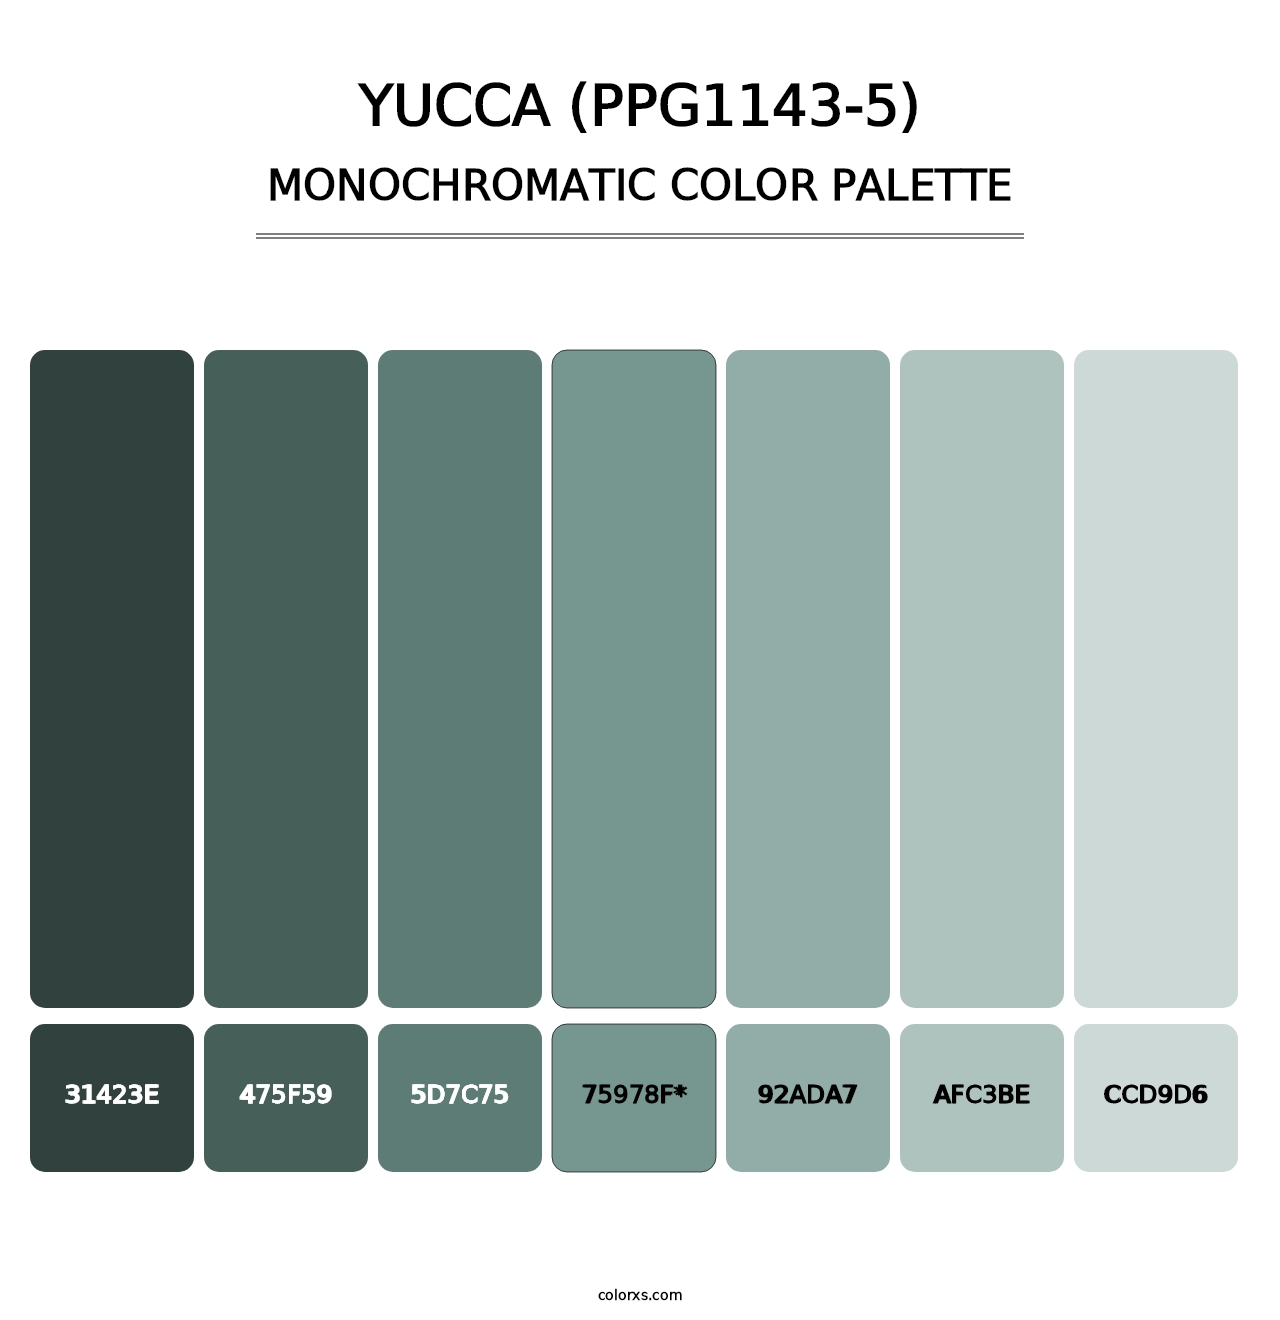 Yucca (PPG1143-5) - Monochromatic Color Palette